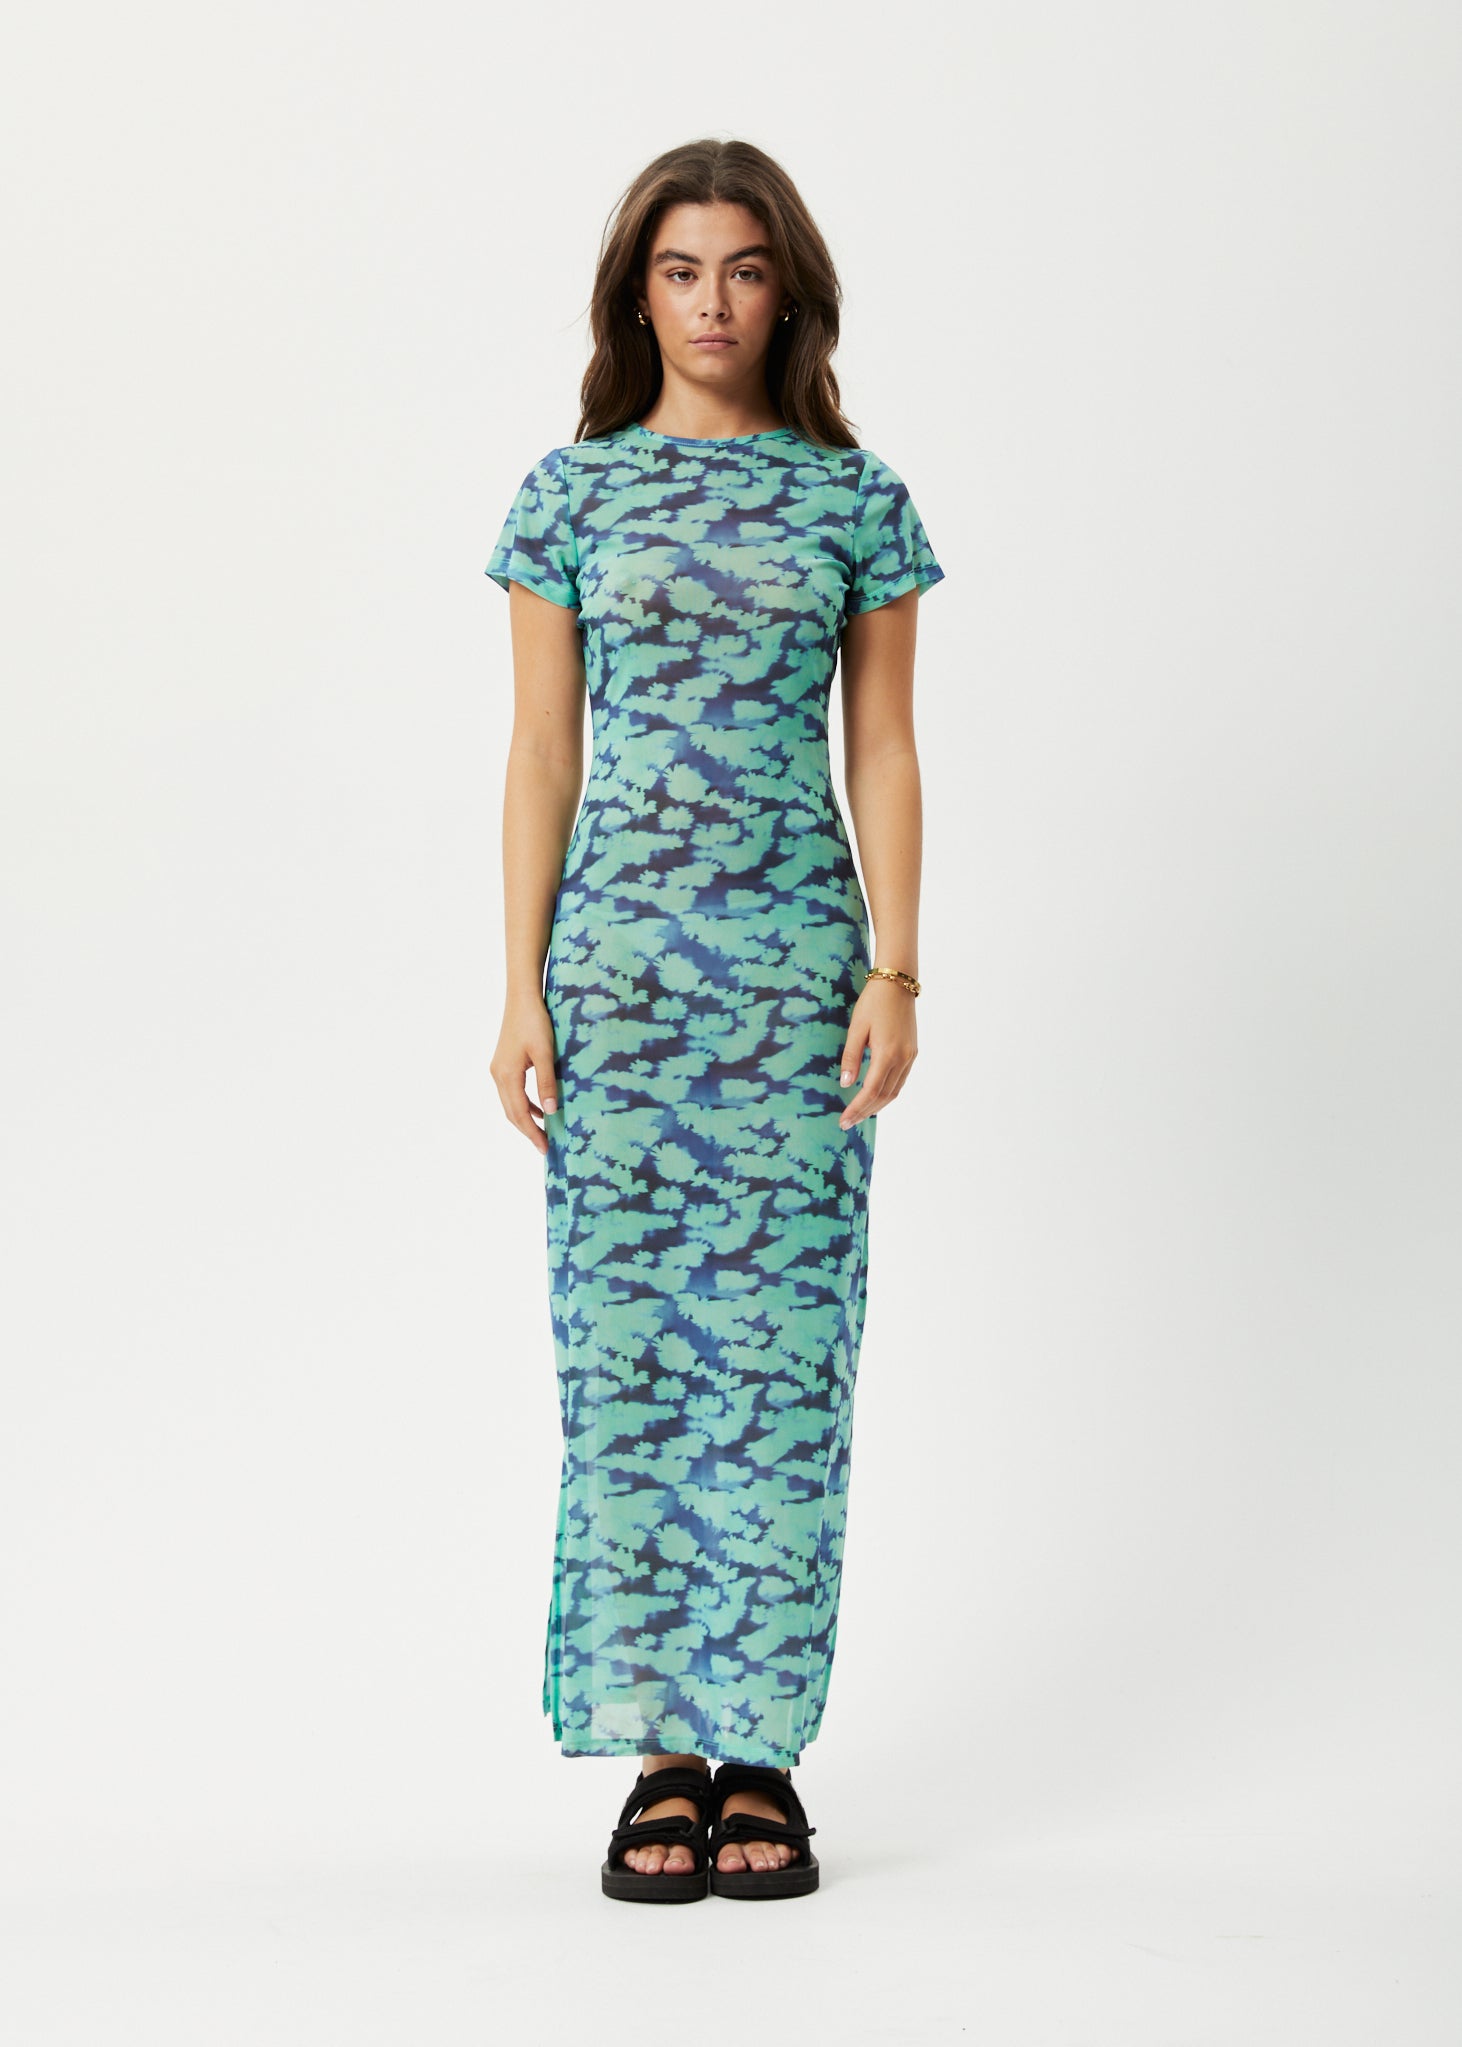 Jade Floral High Low Maxi Dress, S-3XL - ShopperBoard